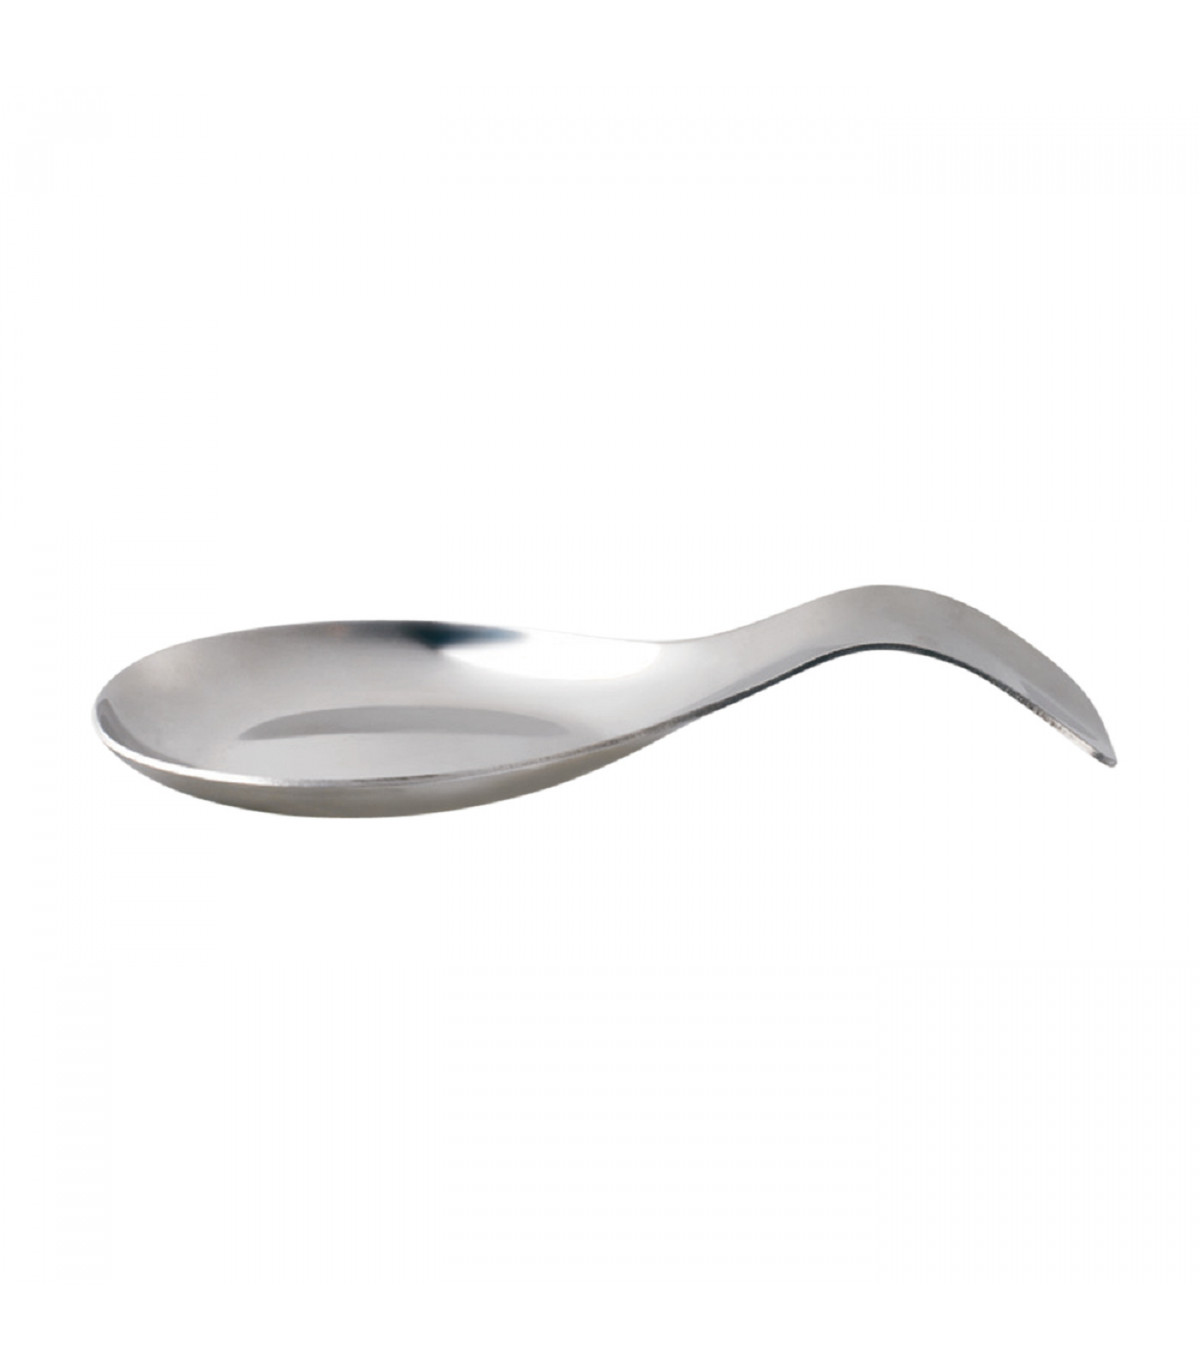 LifeStyle - Soporte para cucharas de acero inoxidable 21 x 8,5 cm, reposa  cucharas, soporte metálico para utensilios de cocina